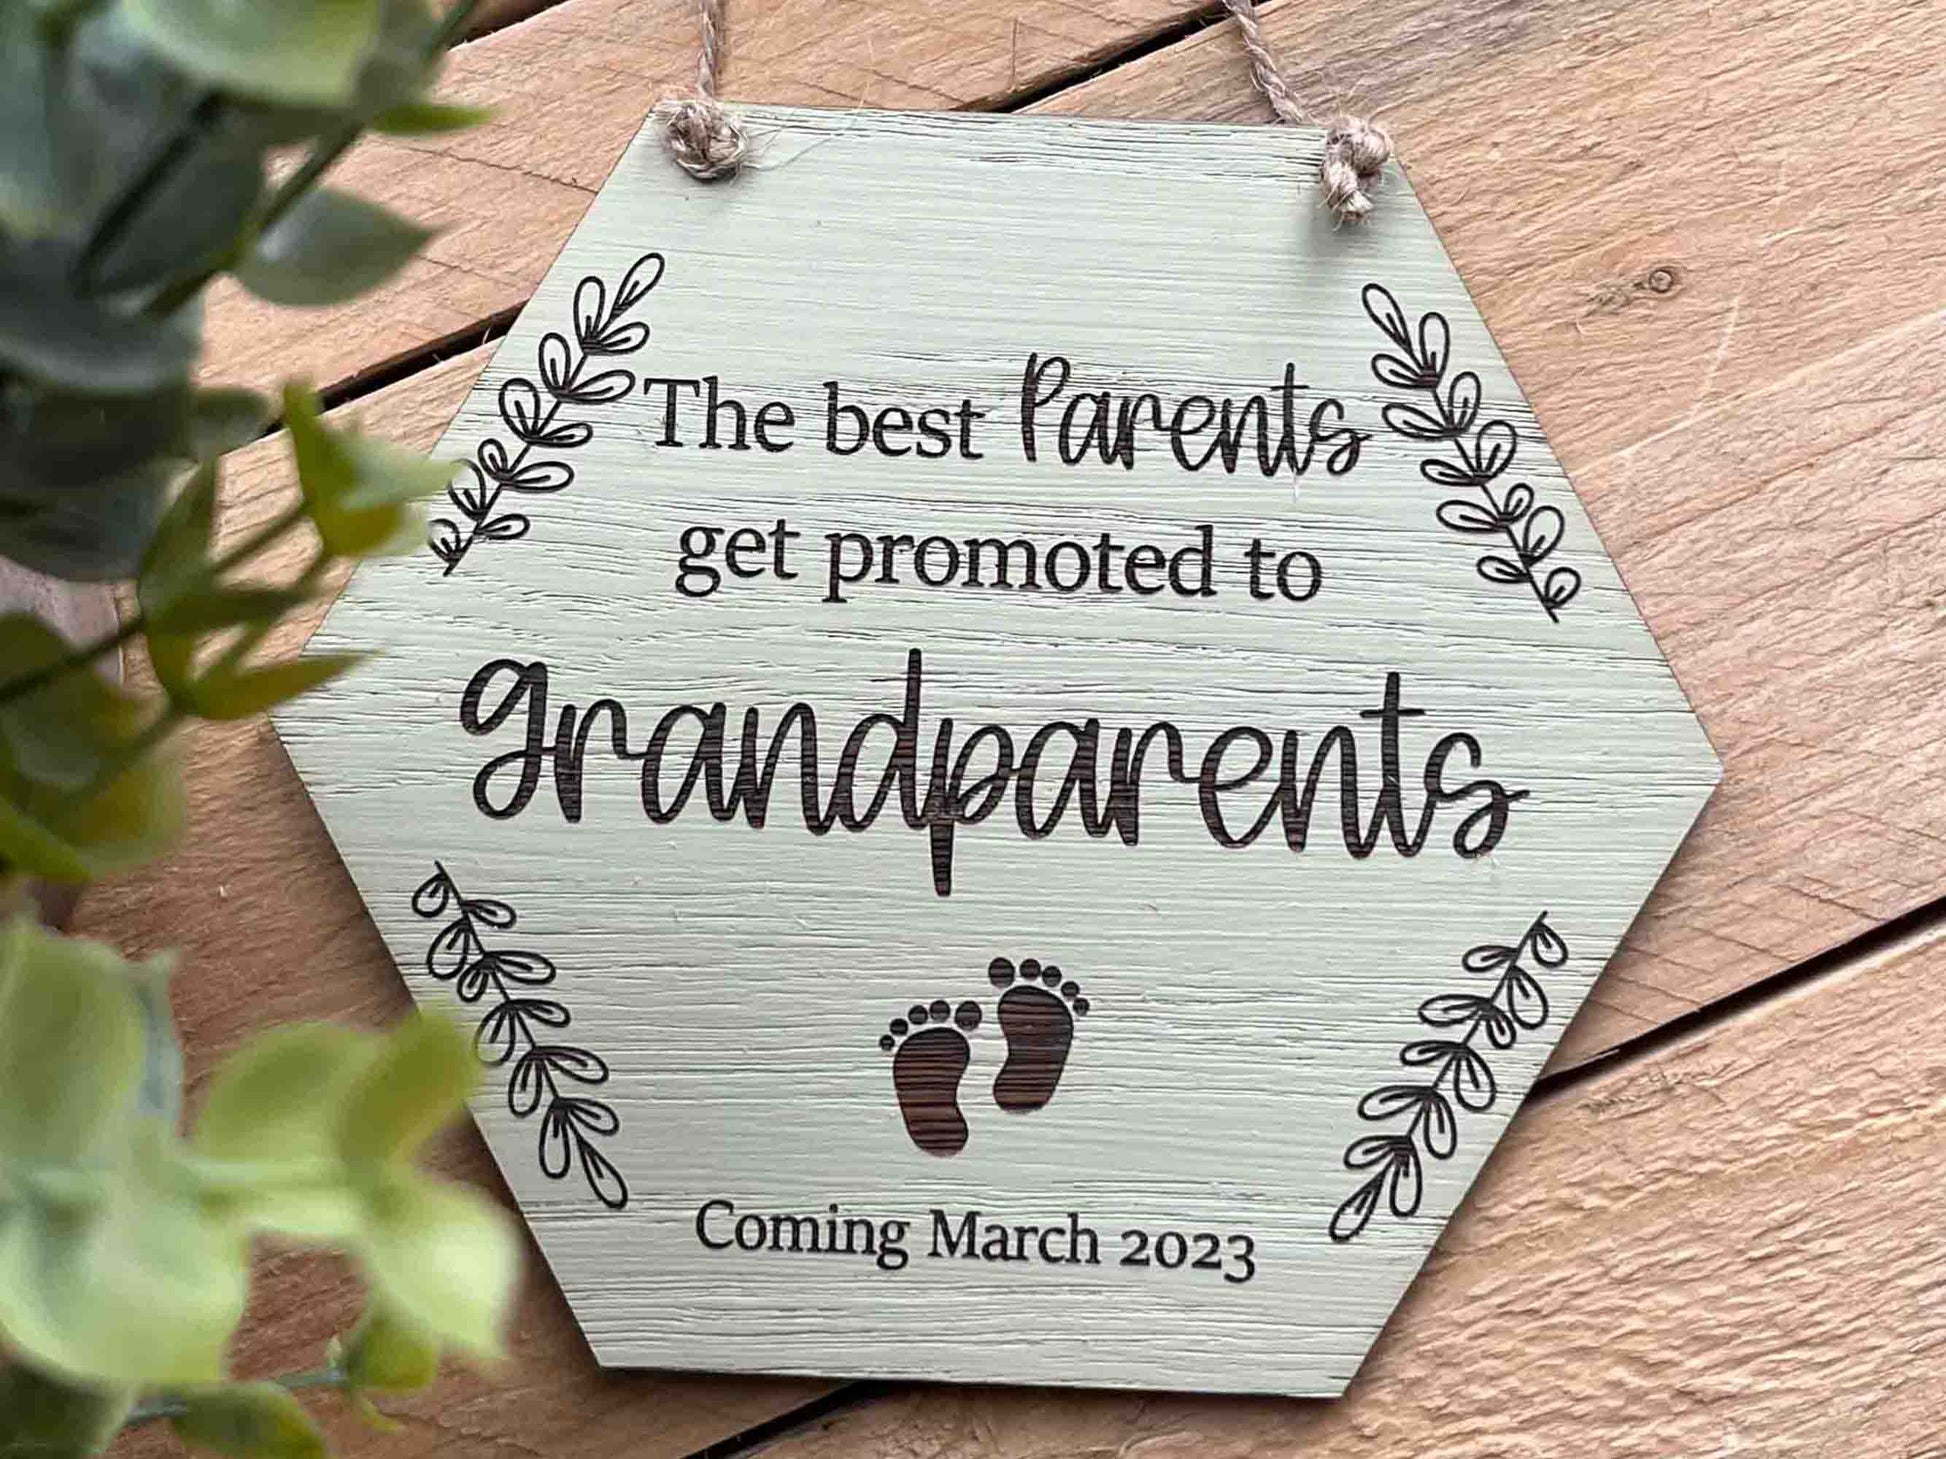 best parents get promoted to grandparents sign